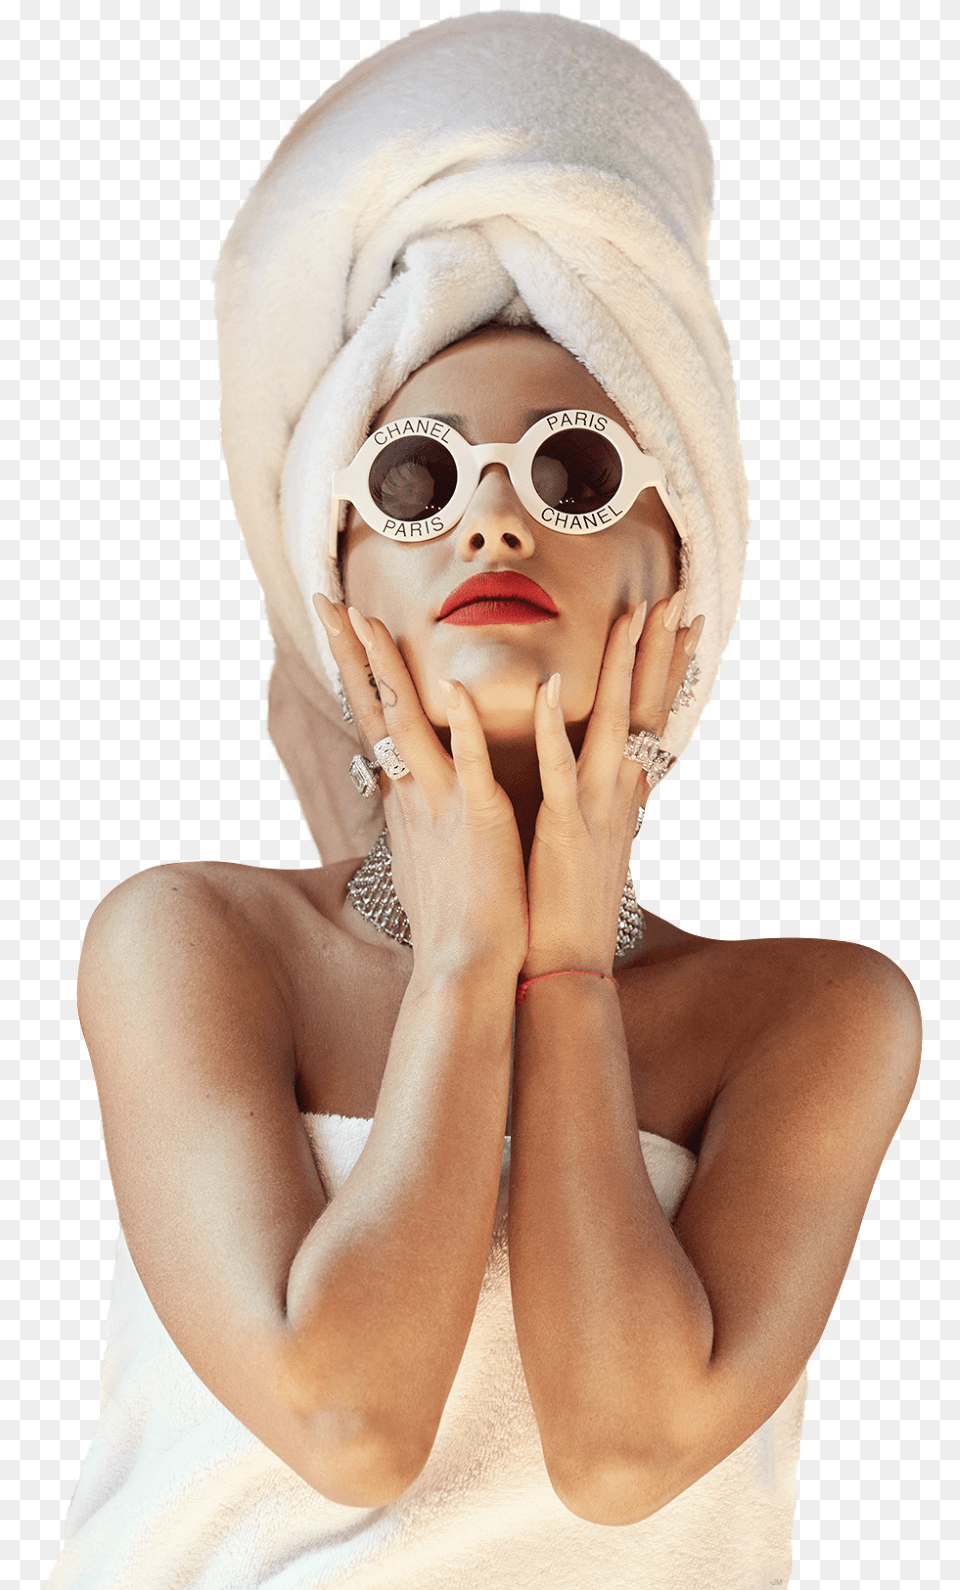 Ariana Grande Chanel Paris, Accessories, Sunglasses, Portrait, Photography Png